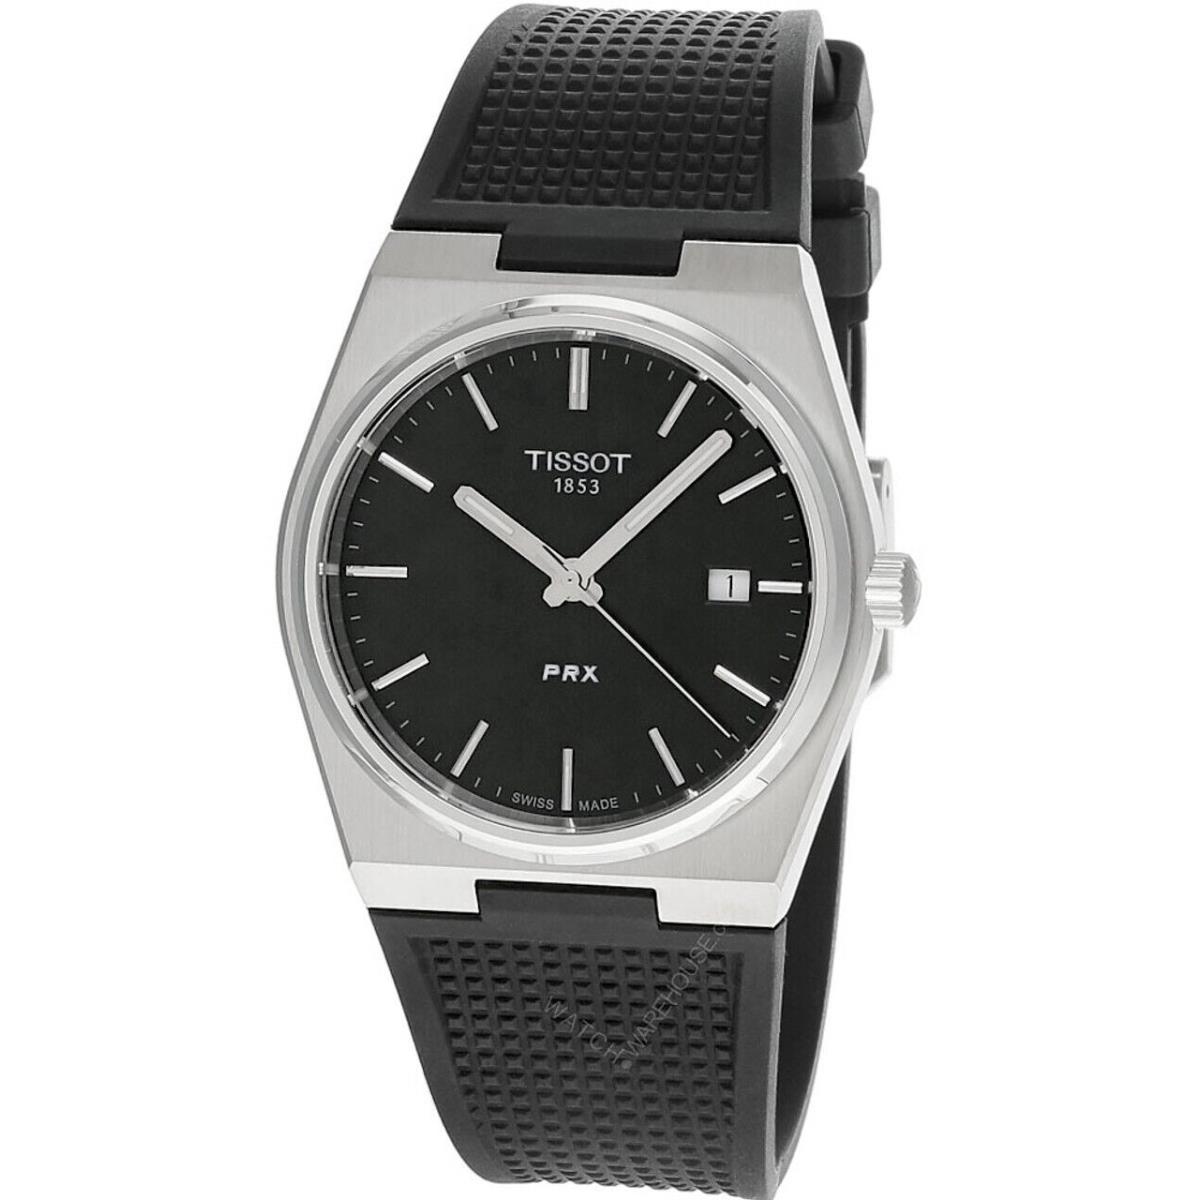 Tissot Prx Quartz 40MM Black Dial Rubber Men`s Watch T137.410.17.051.00 - Black Dial, Black Band, Silver Bezel